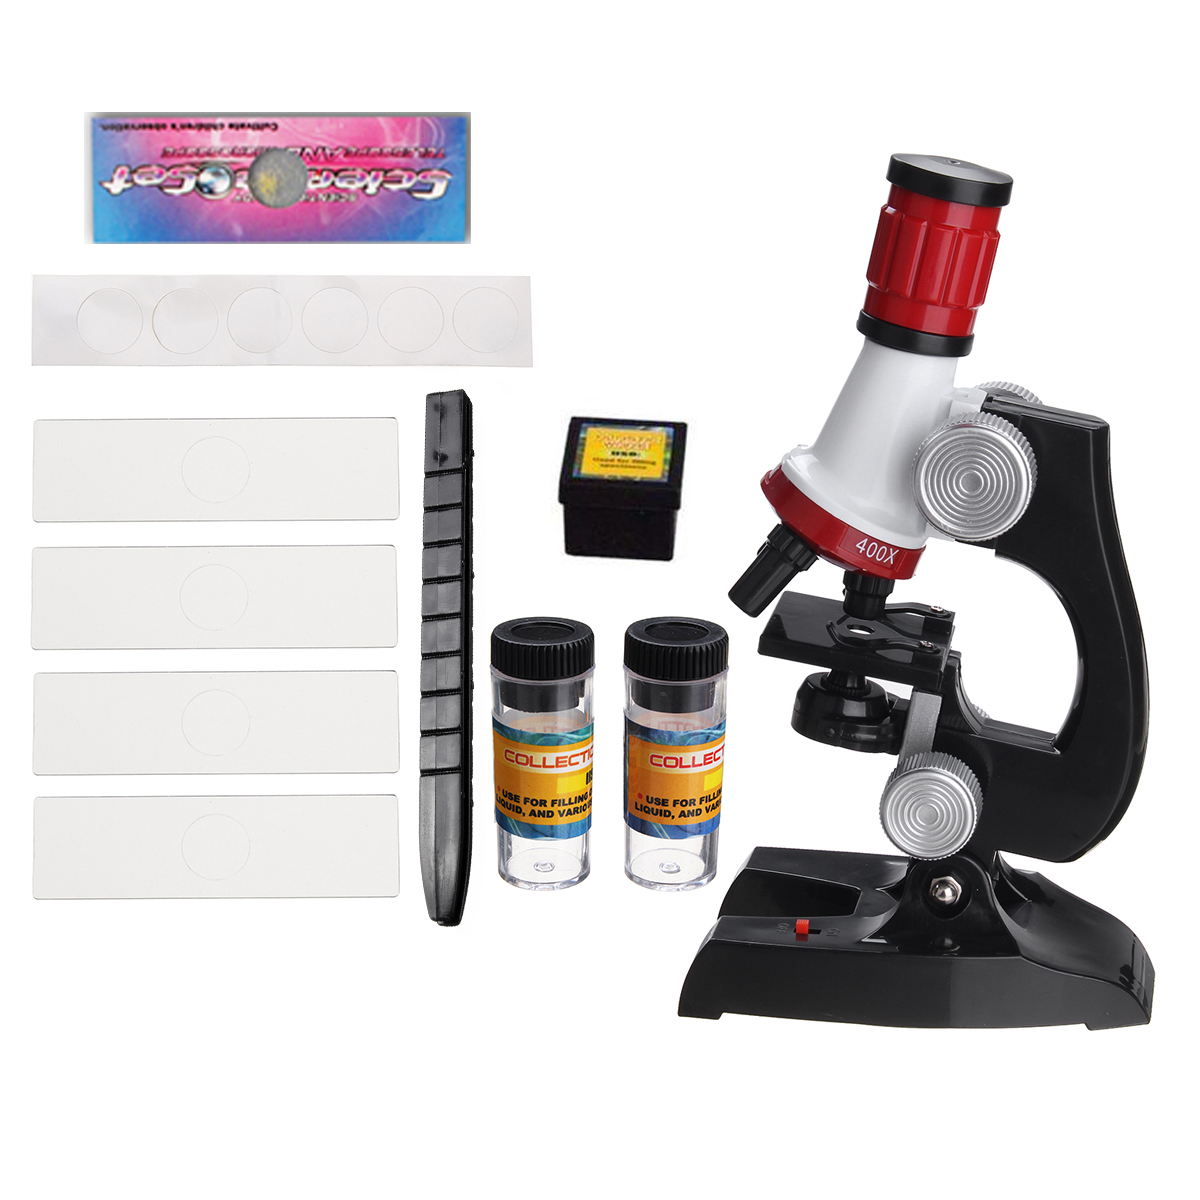 Biological-Microscope-Monocular-Lab-Science-100X-400X-1200X-Educational-Kids-Toy-1251120-10